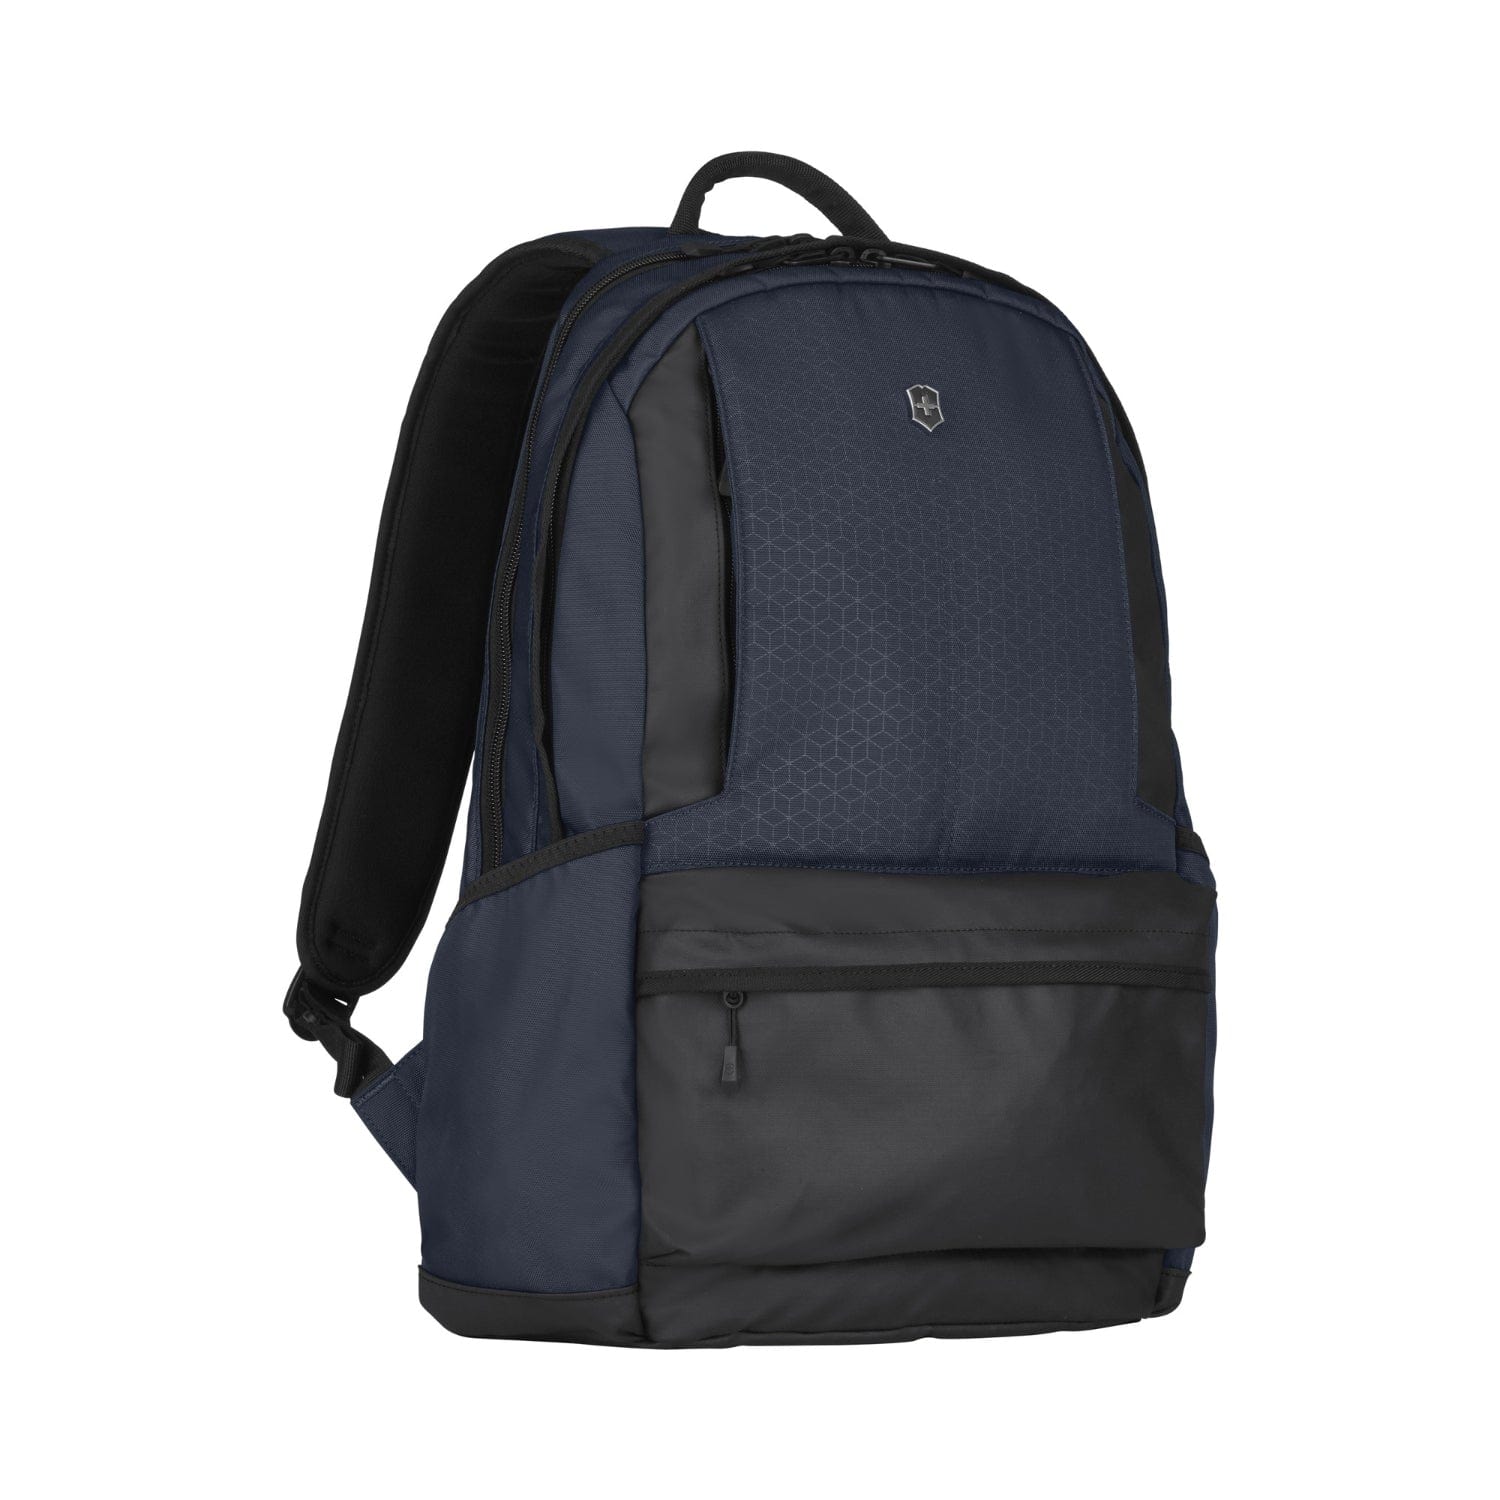 Victorinox Altmont Original 17 inch Laptop Backpack Blue - 606743